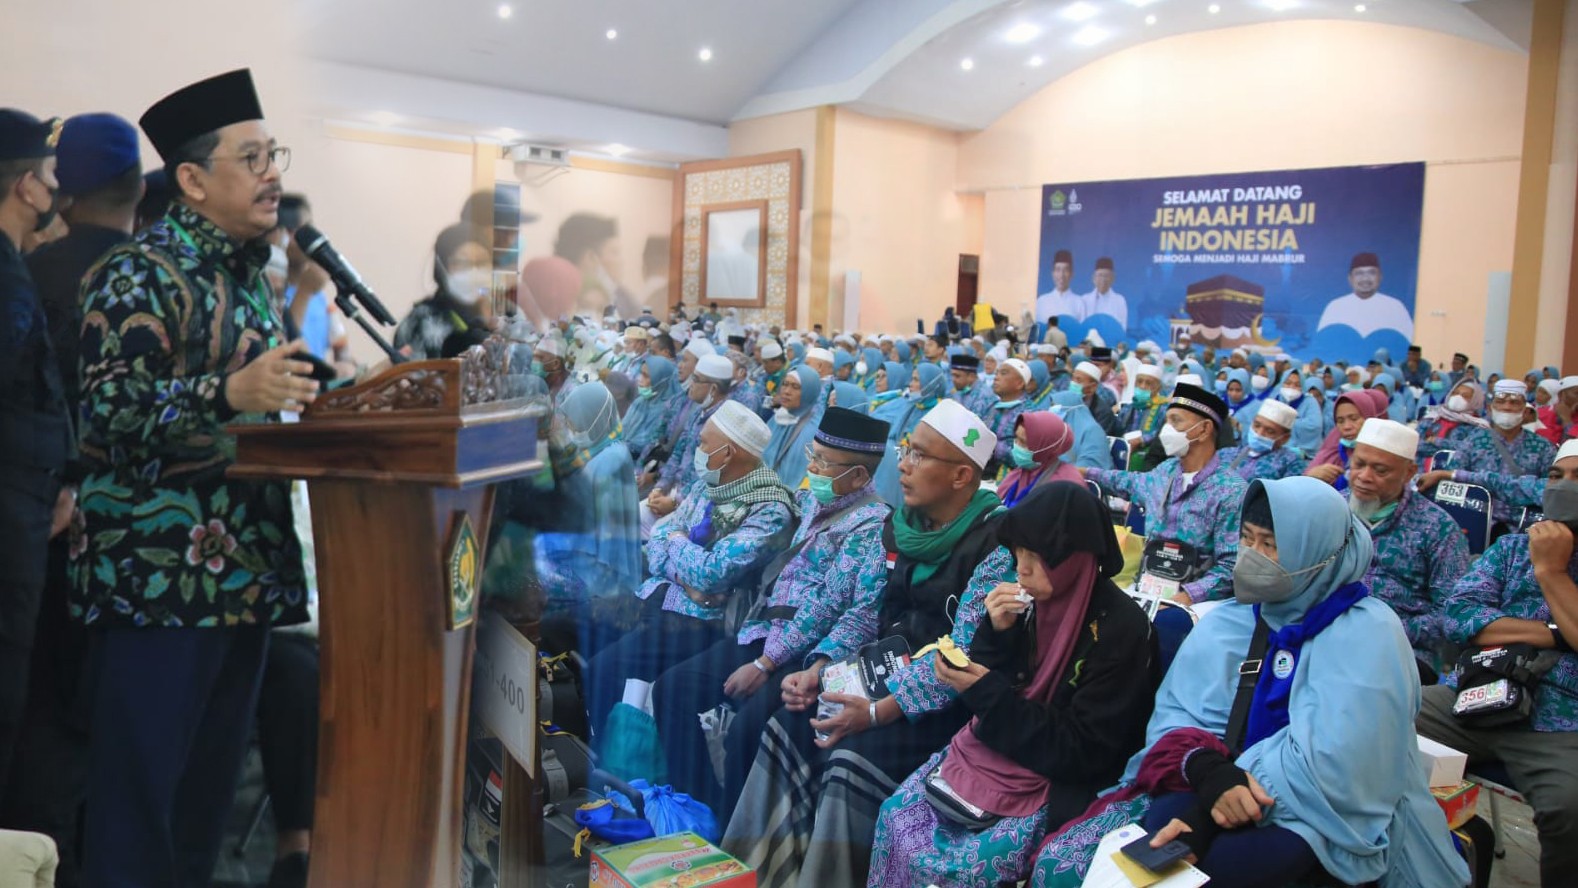 Wakil Menteri Agama sambut kedatangan 388 jemaah haji Indonesia di Debarkasi Medan